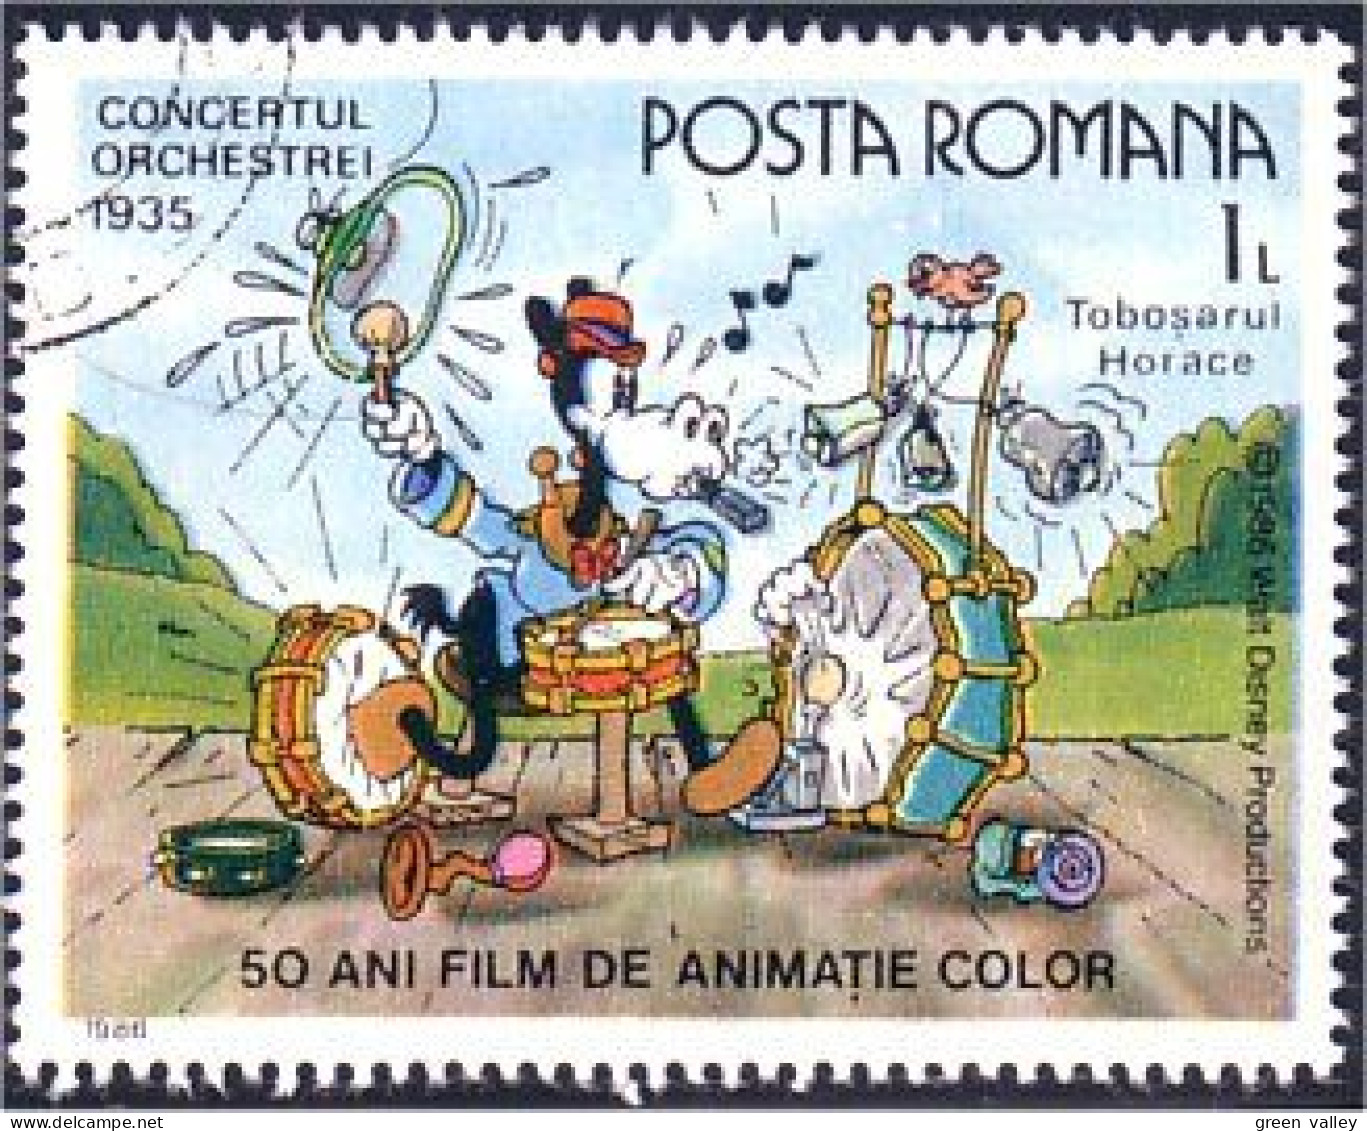 766 Roumanie Disney Horace One Man Band Homme Orchestre (ROU-89) - Musik